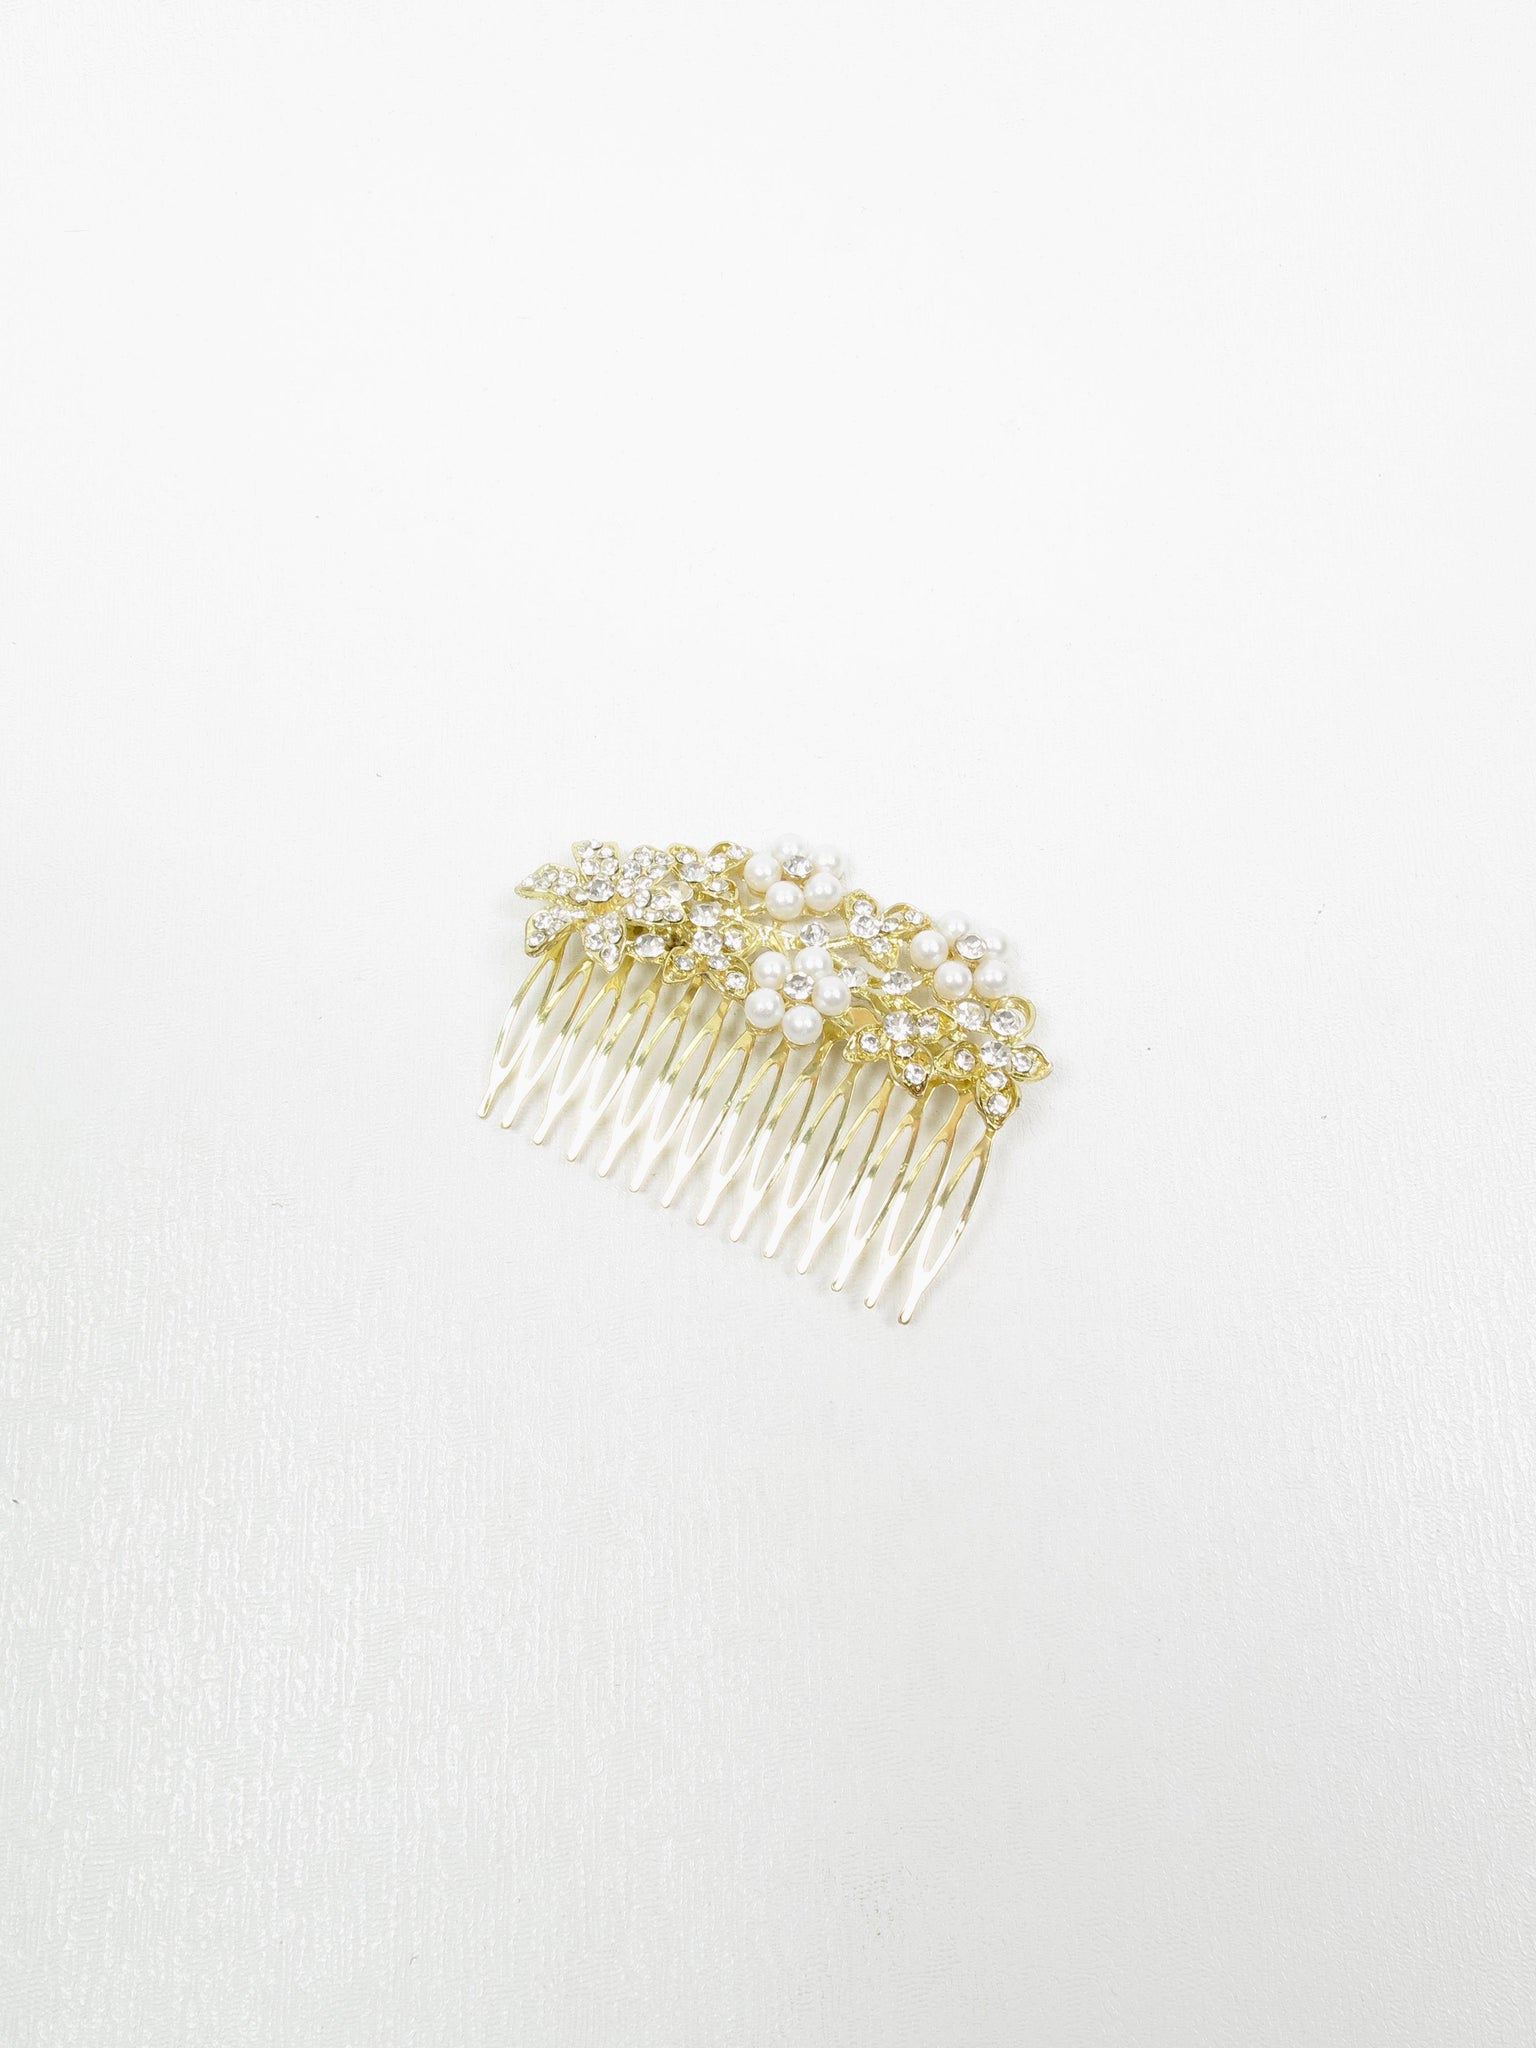 Gold Diamanté & Pearl Hair Comb - The Harlequin